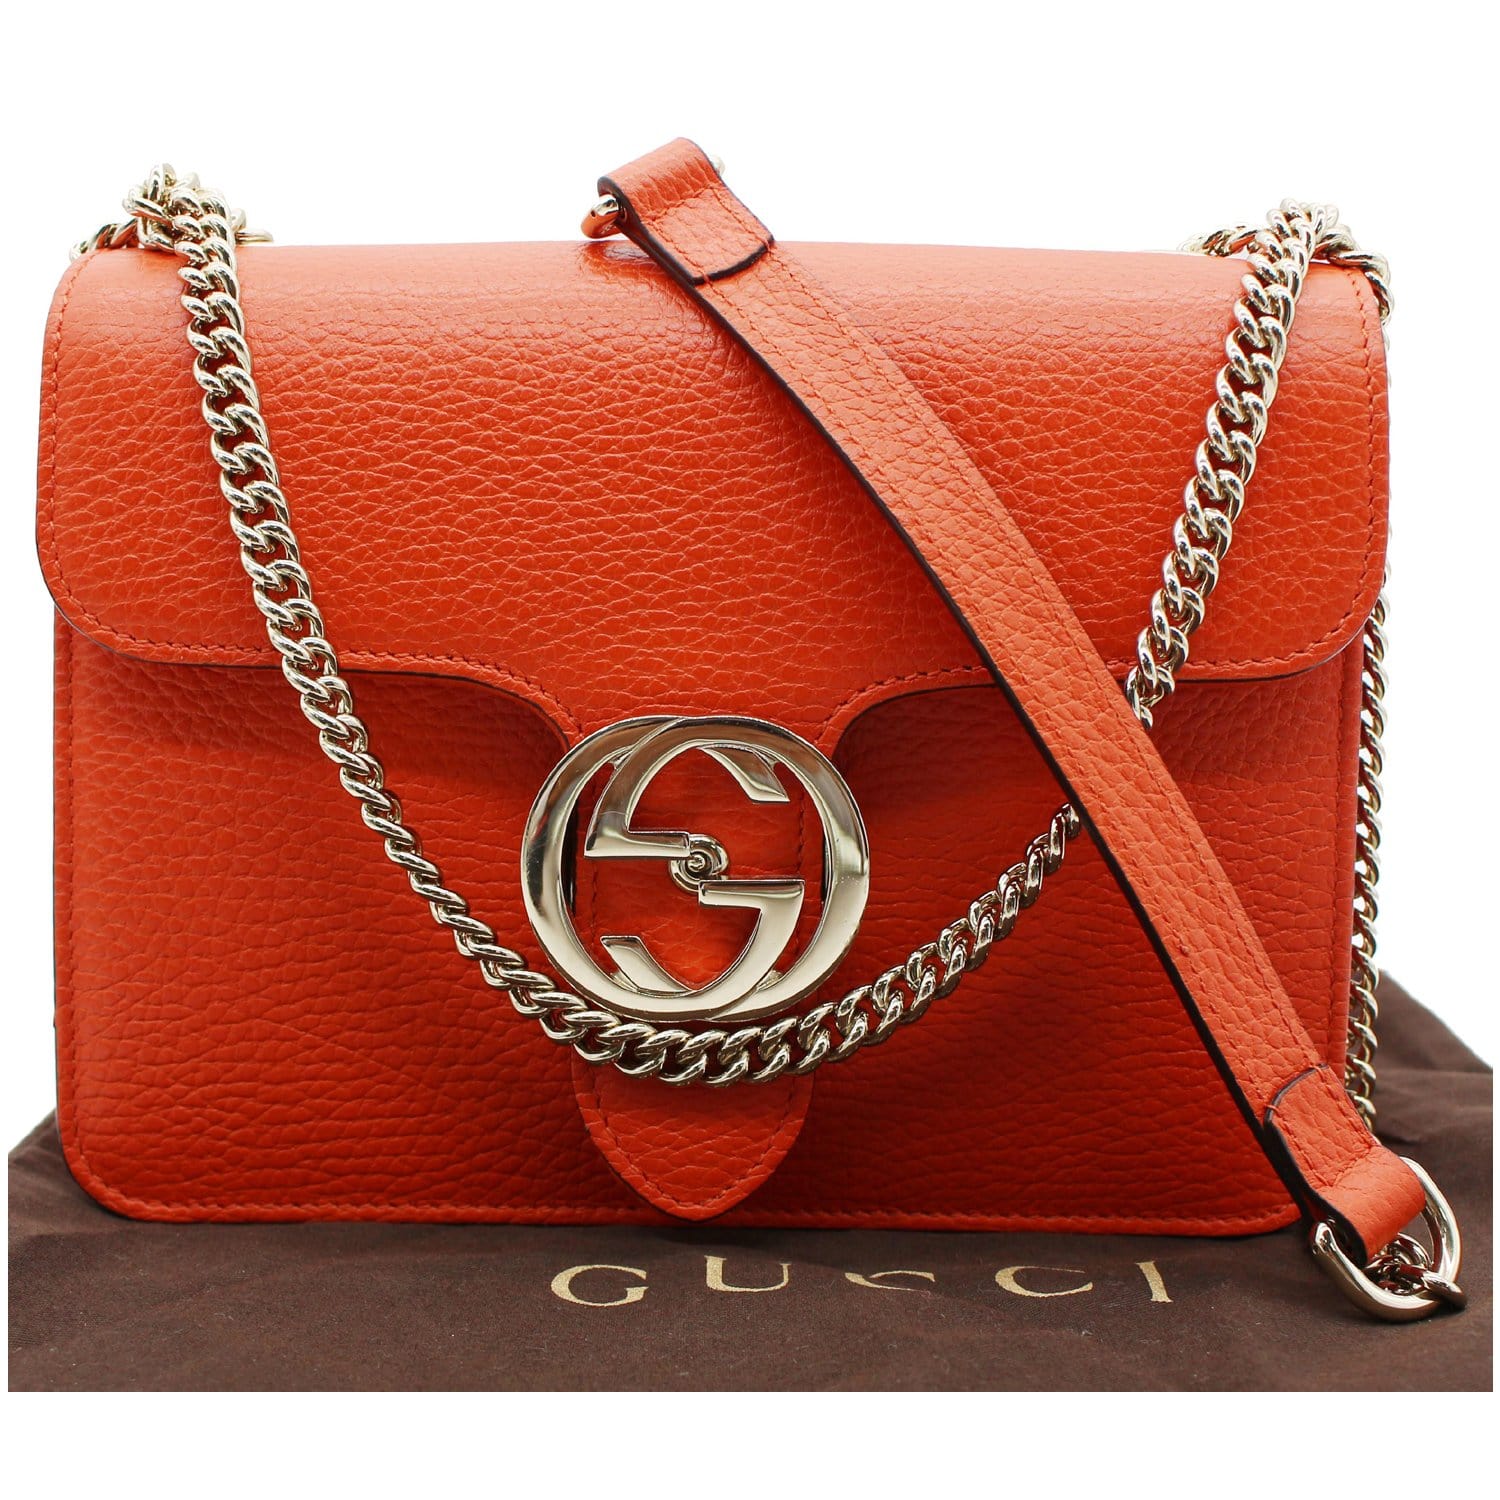 Gucci Interlocking GG Bag